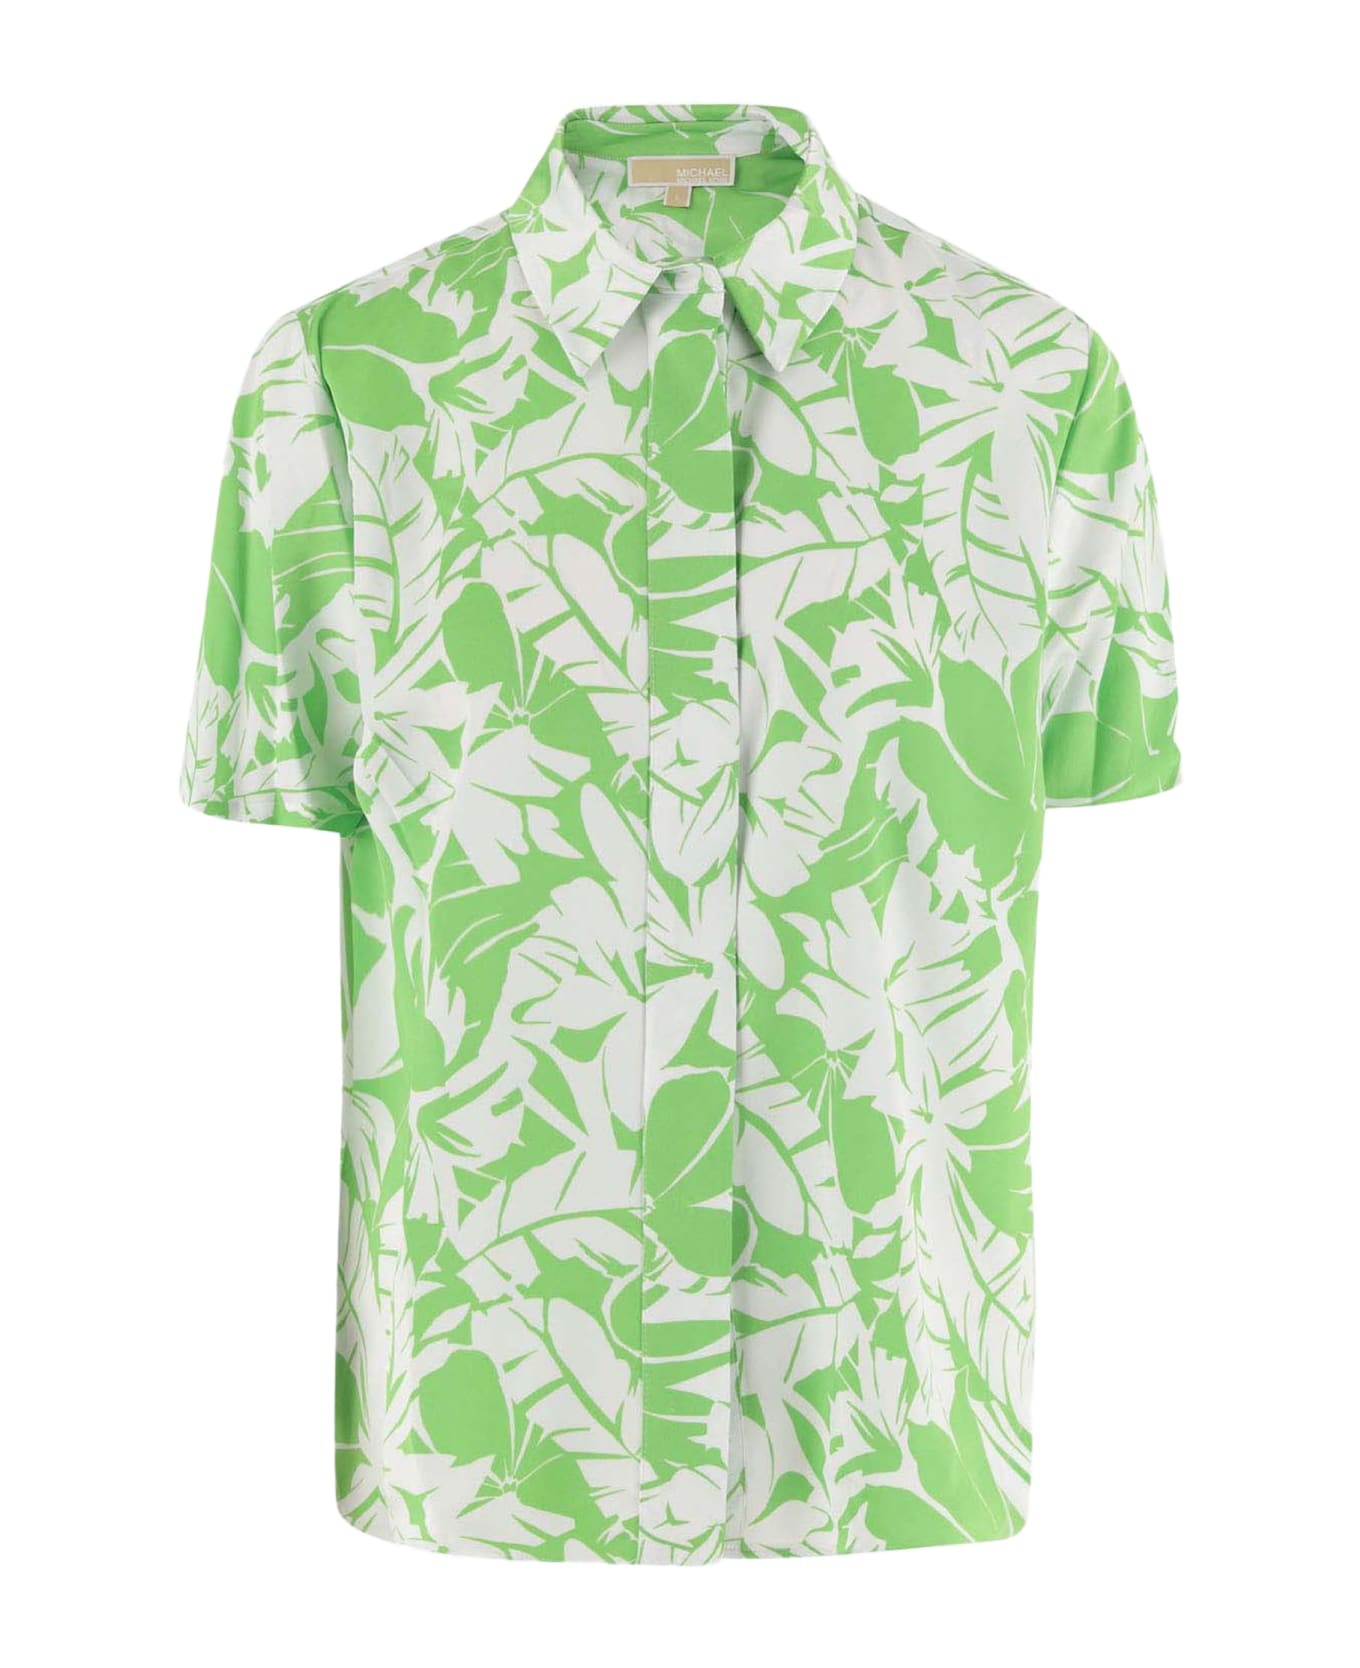 Michael Kors Nylon Shirt With Floral Pattern Michael Kors - Green シャツ